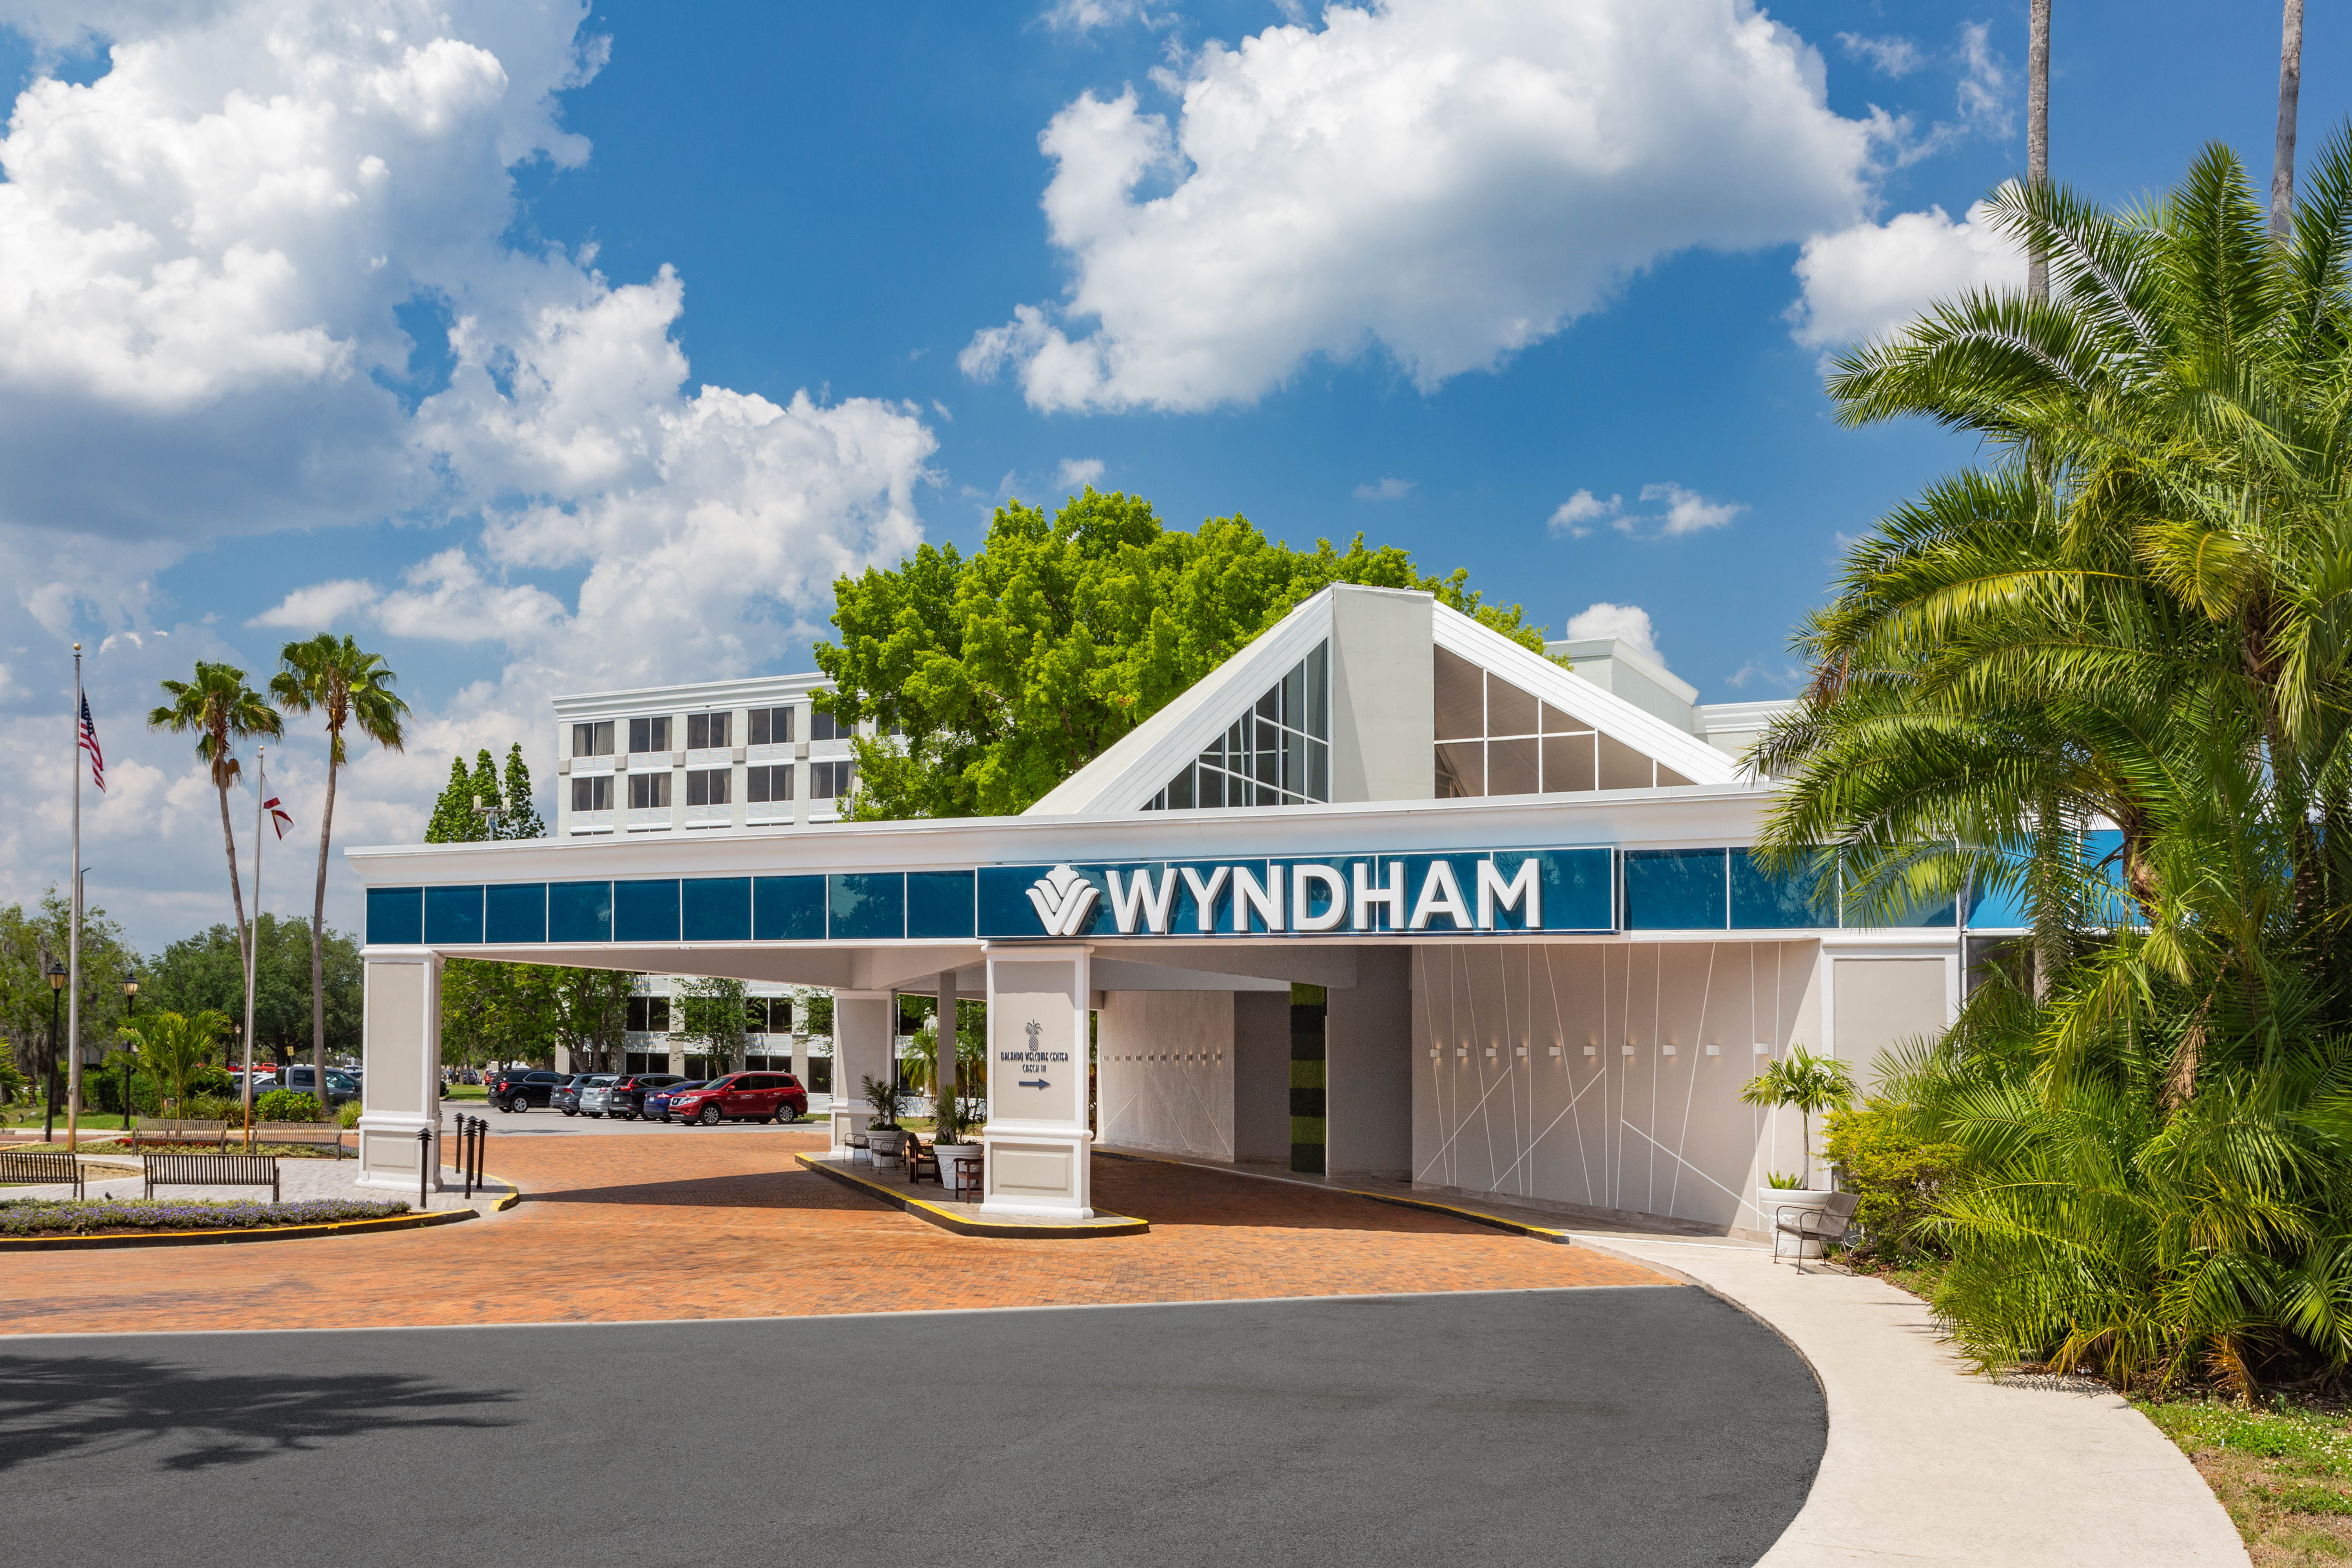 Wyndham Hotel Celebration by Days cerca de Disney World